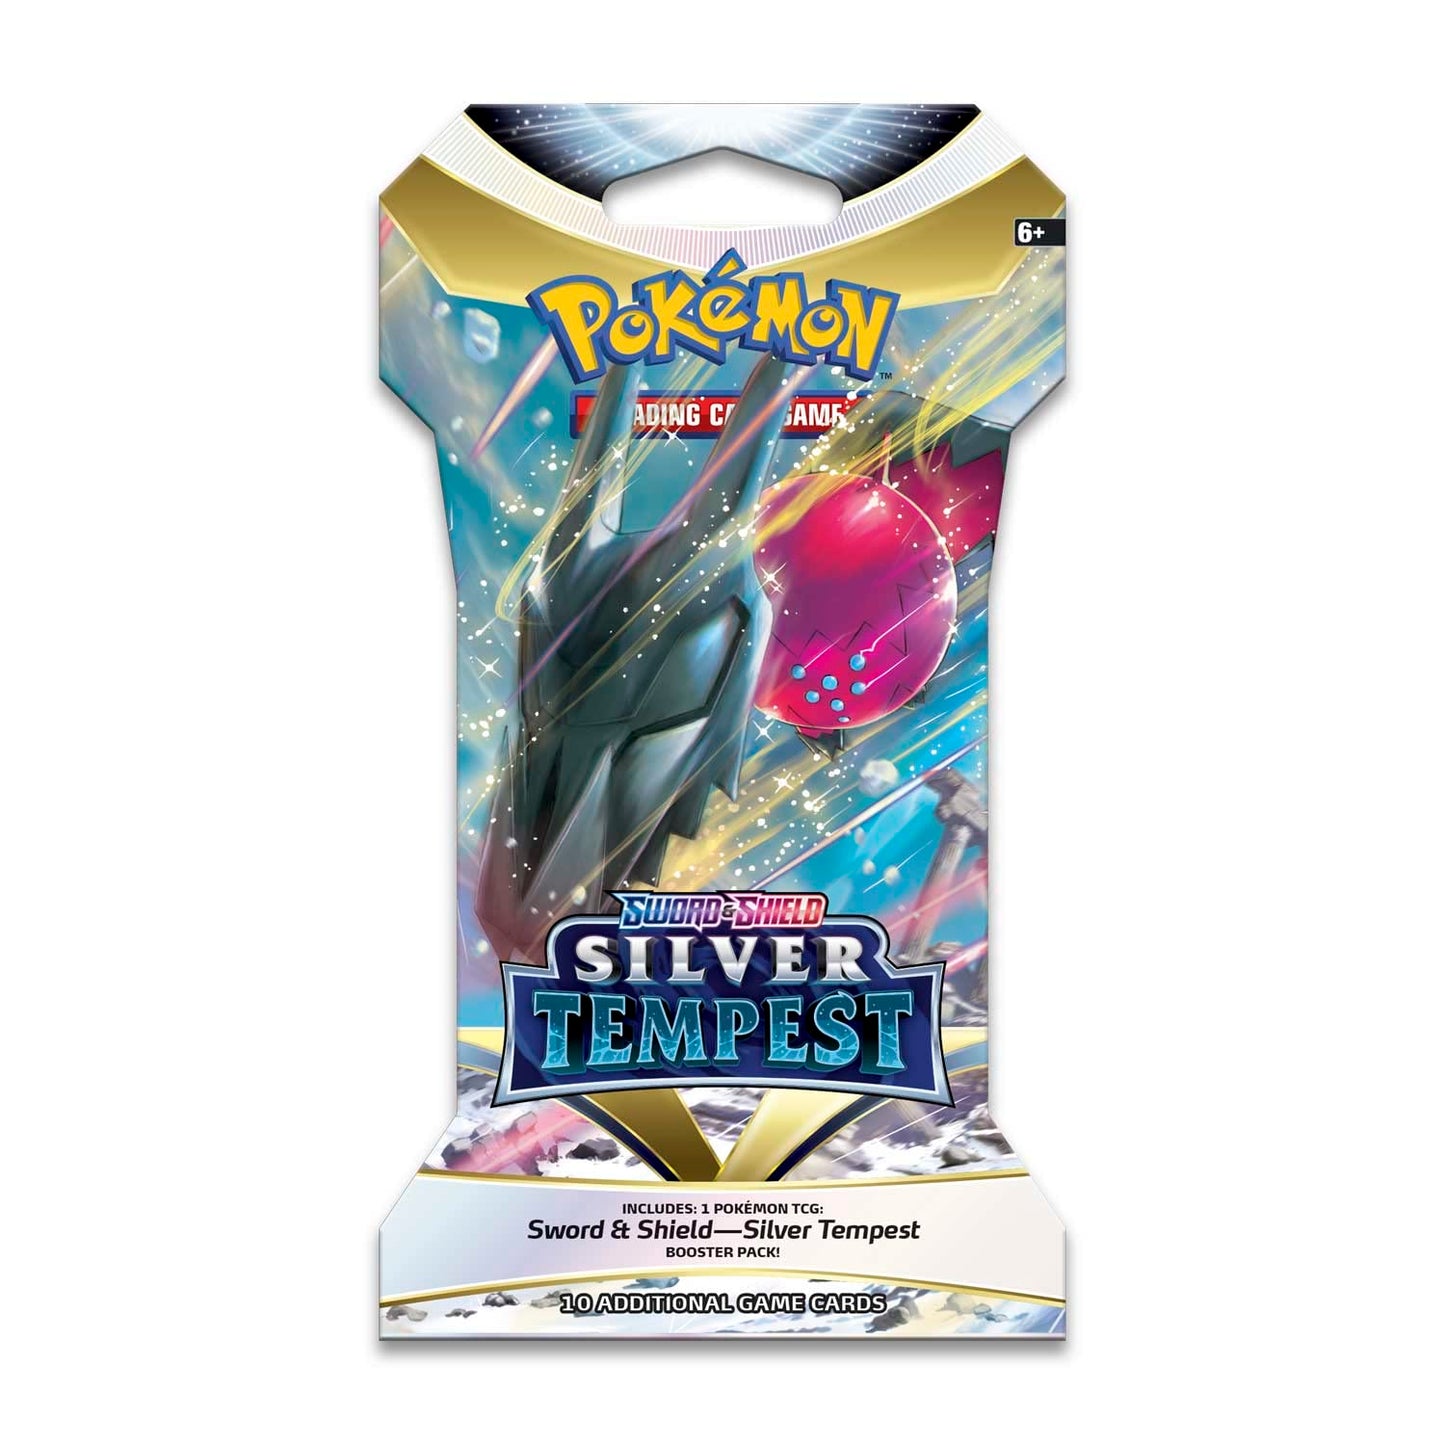 Pokémon Silver Tempest Asst. packs